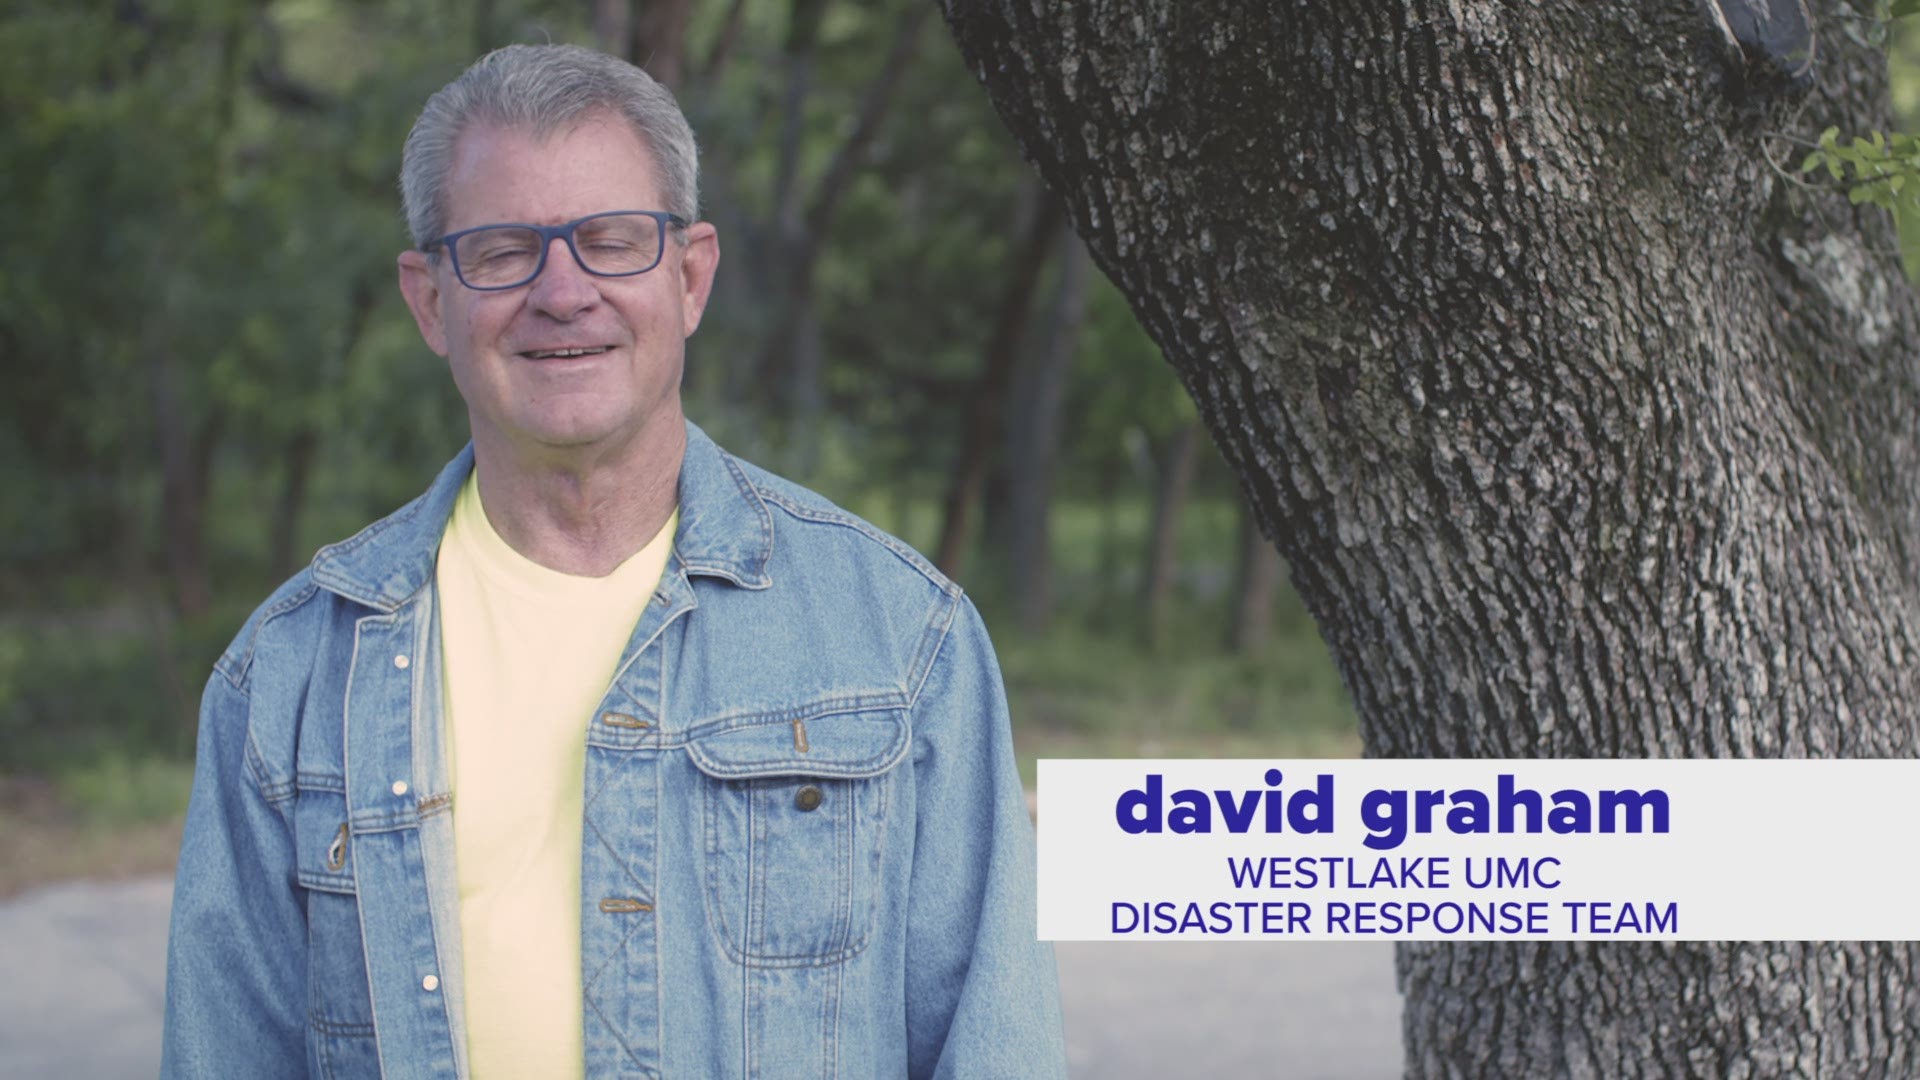 Meet Five Who Care winner David Graham.